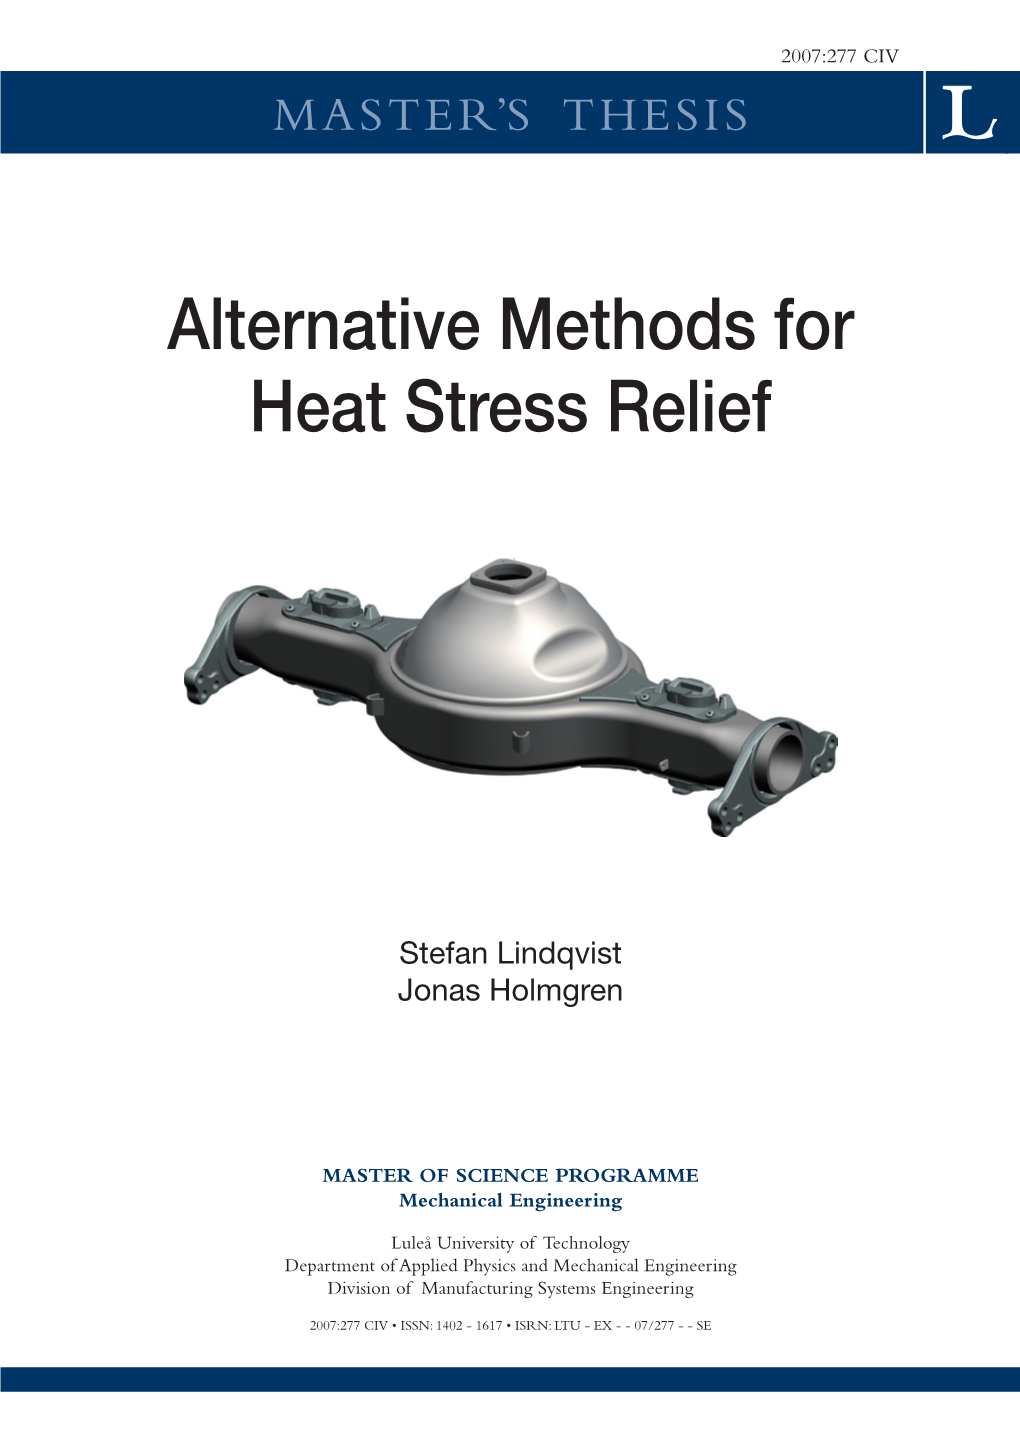 Alternative Methods for Heat Stress Relief